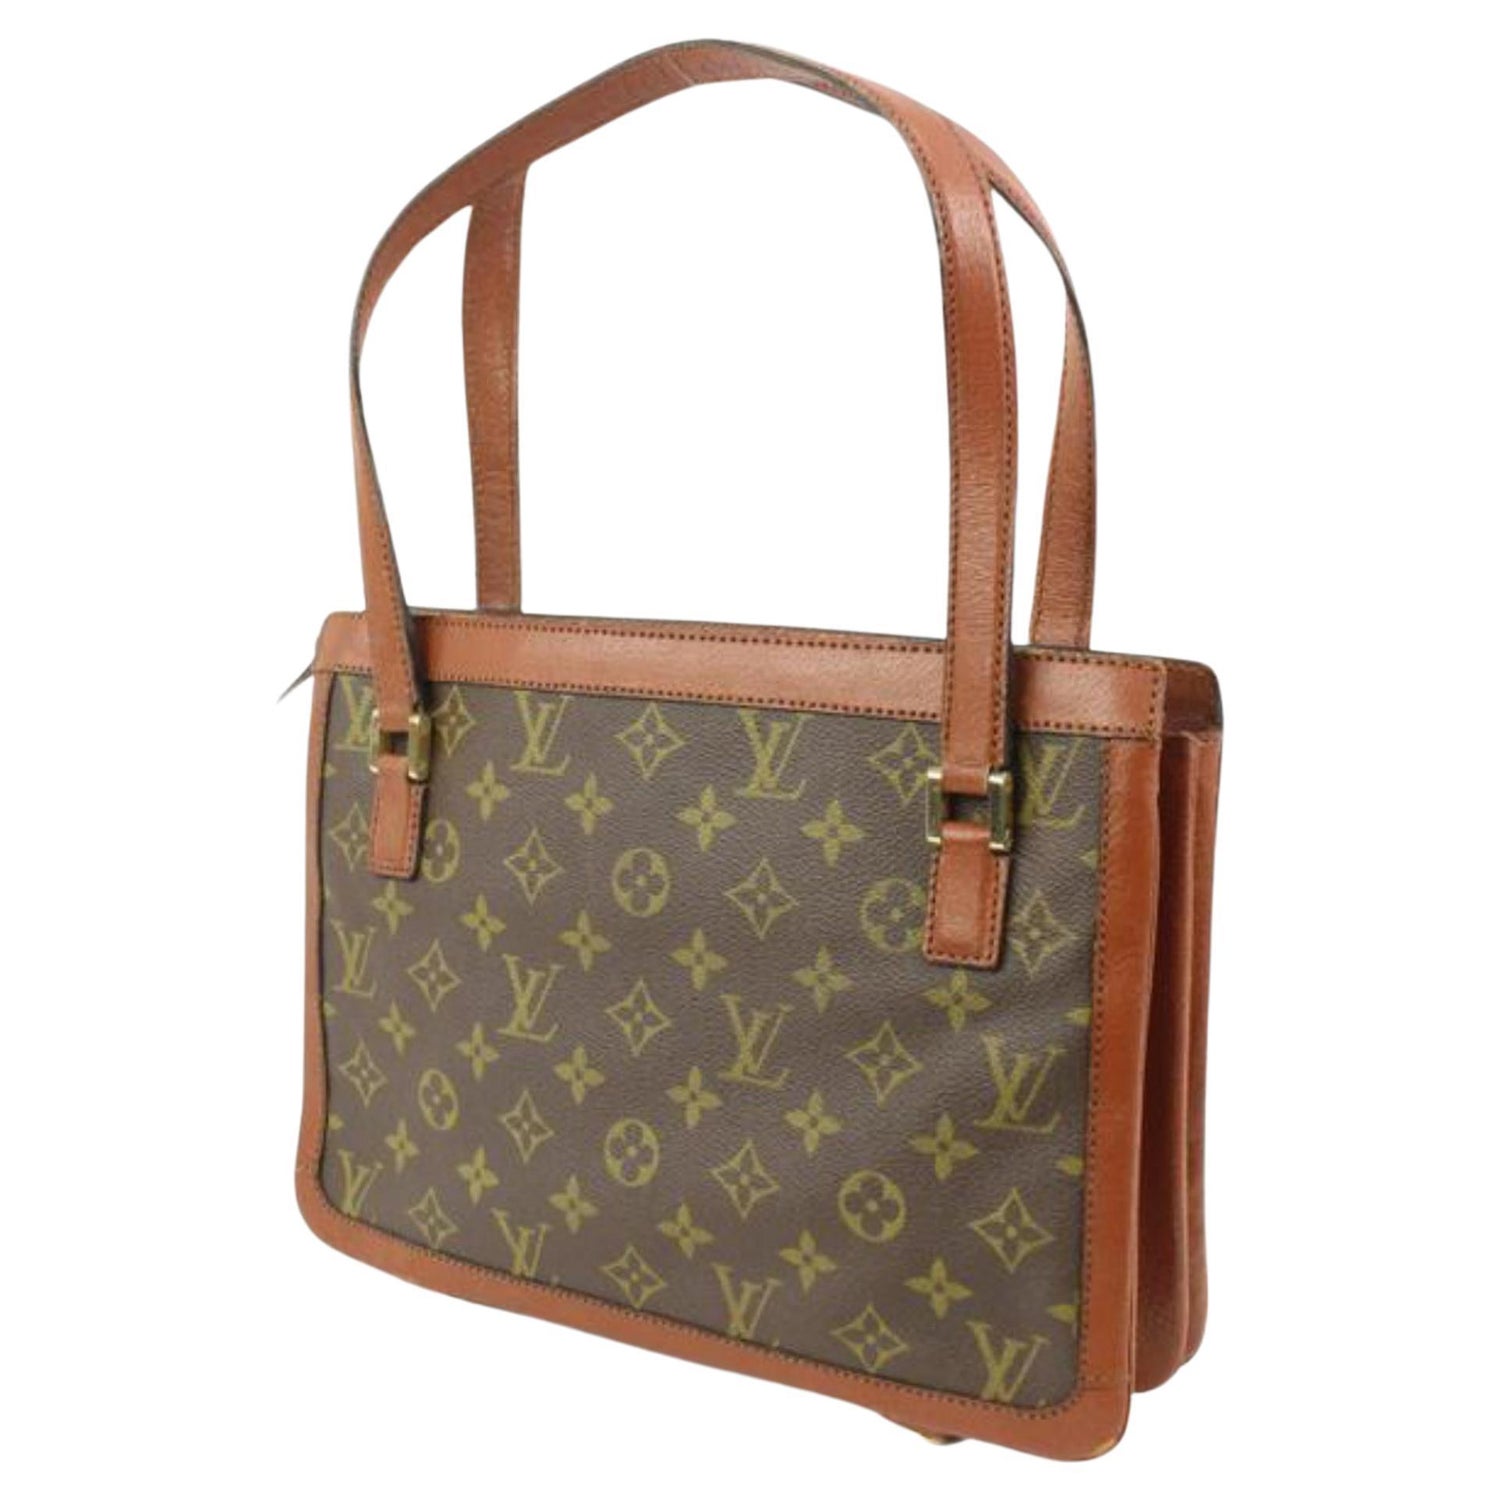 Louis Vuitton Pallas Mm M40906 Discontinued Tote Bag Monogram Oror